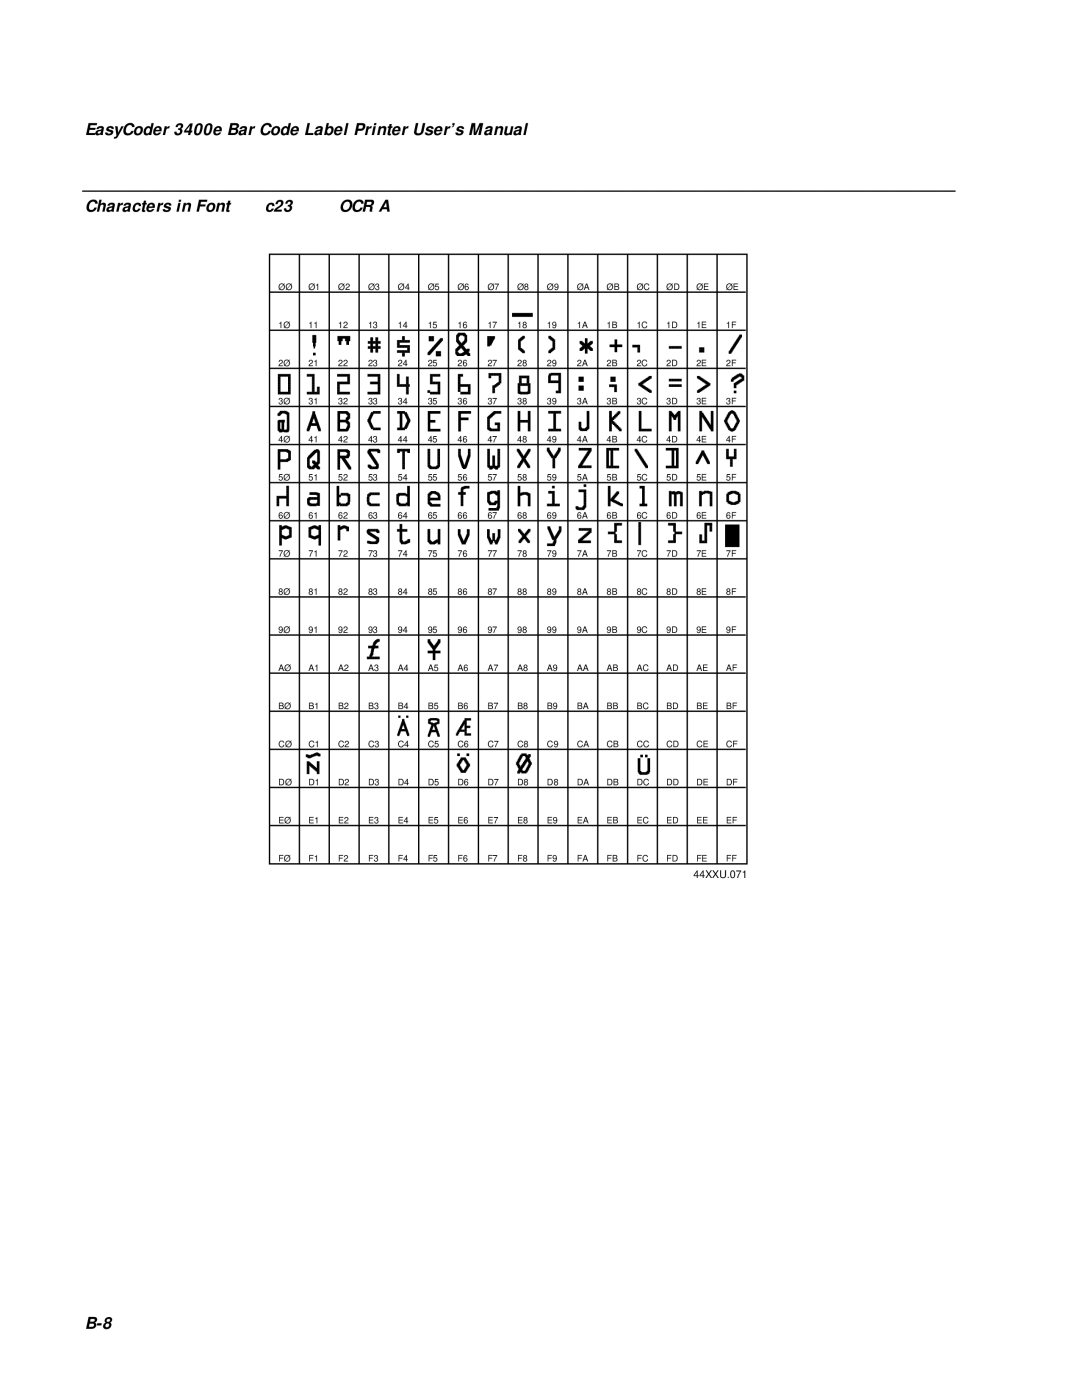 IBM user manual EasyCoder 3400e Bar Code Label Printer User’s Manual, Characters in Font, Ocr A, 44XXU.071 